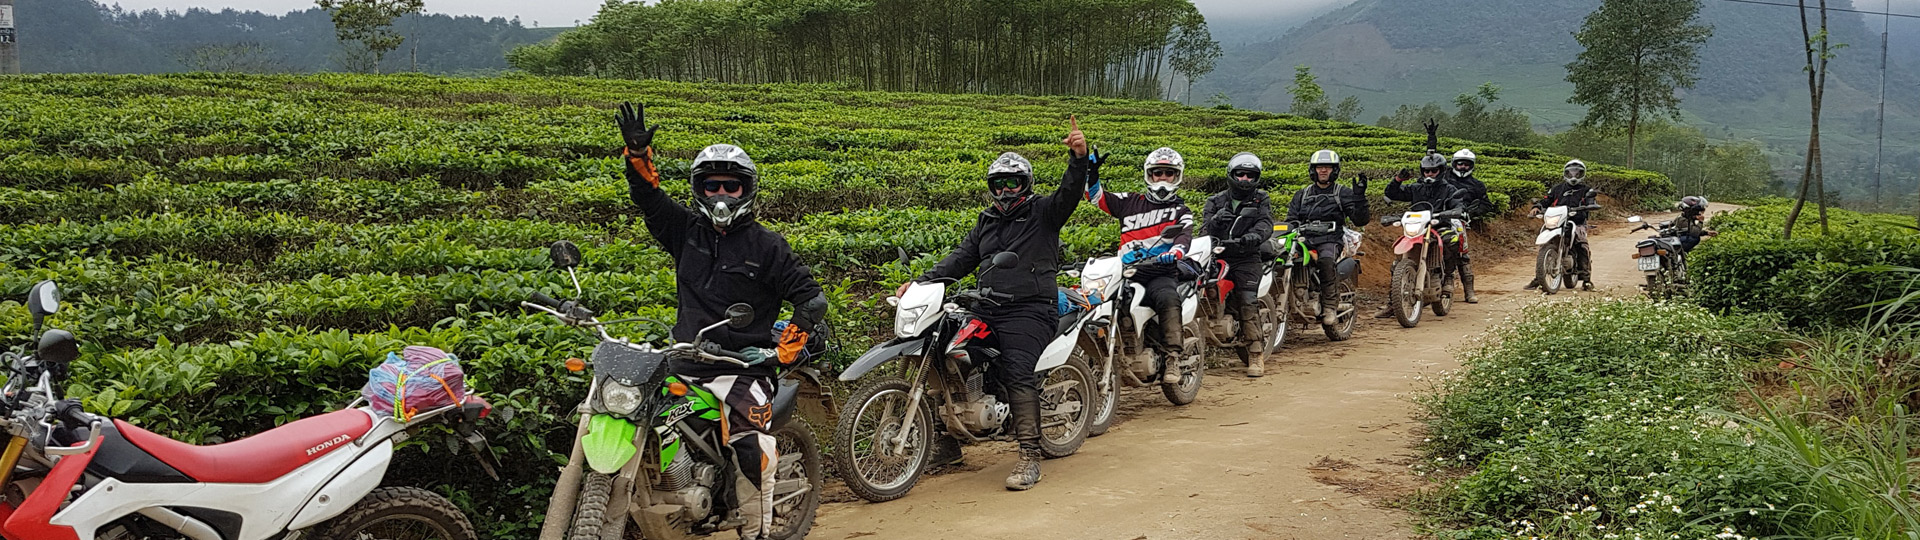 Laos Motorbike Tours 6